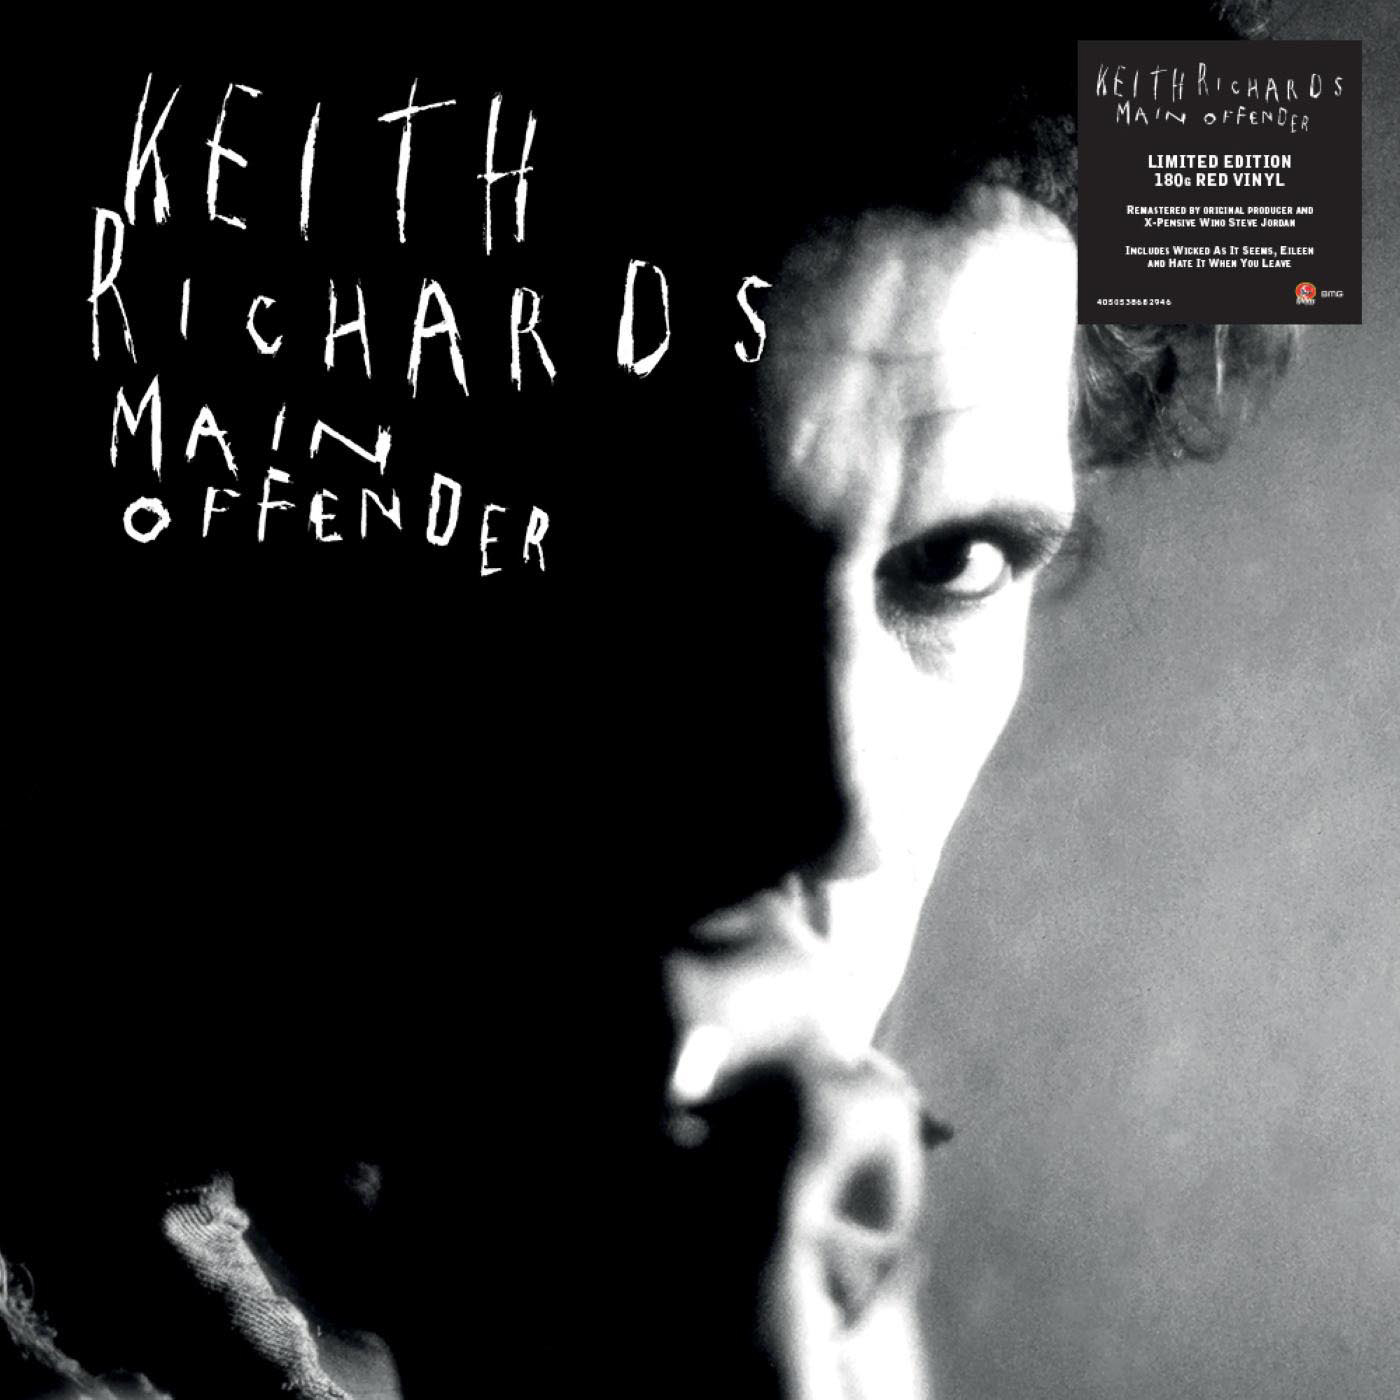 Keith Richards - Main (Remastered) Offender - (Red Vinyl) (Vinyl)